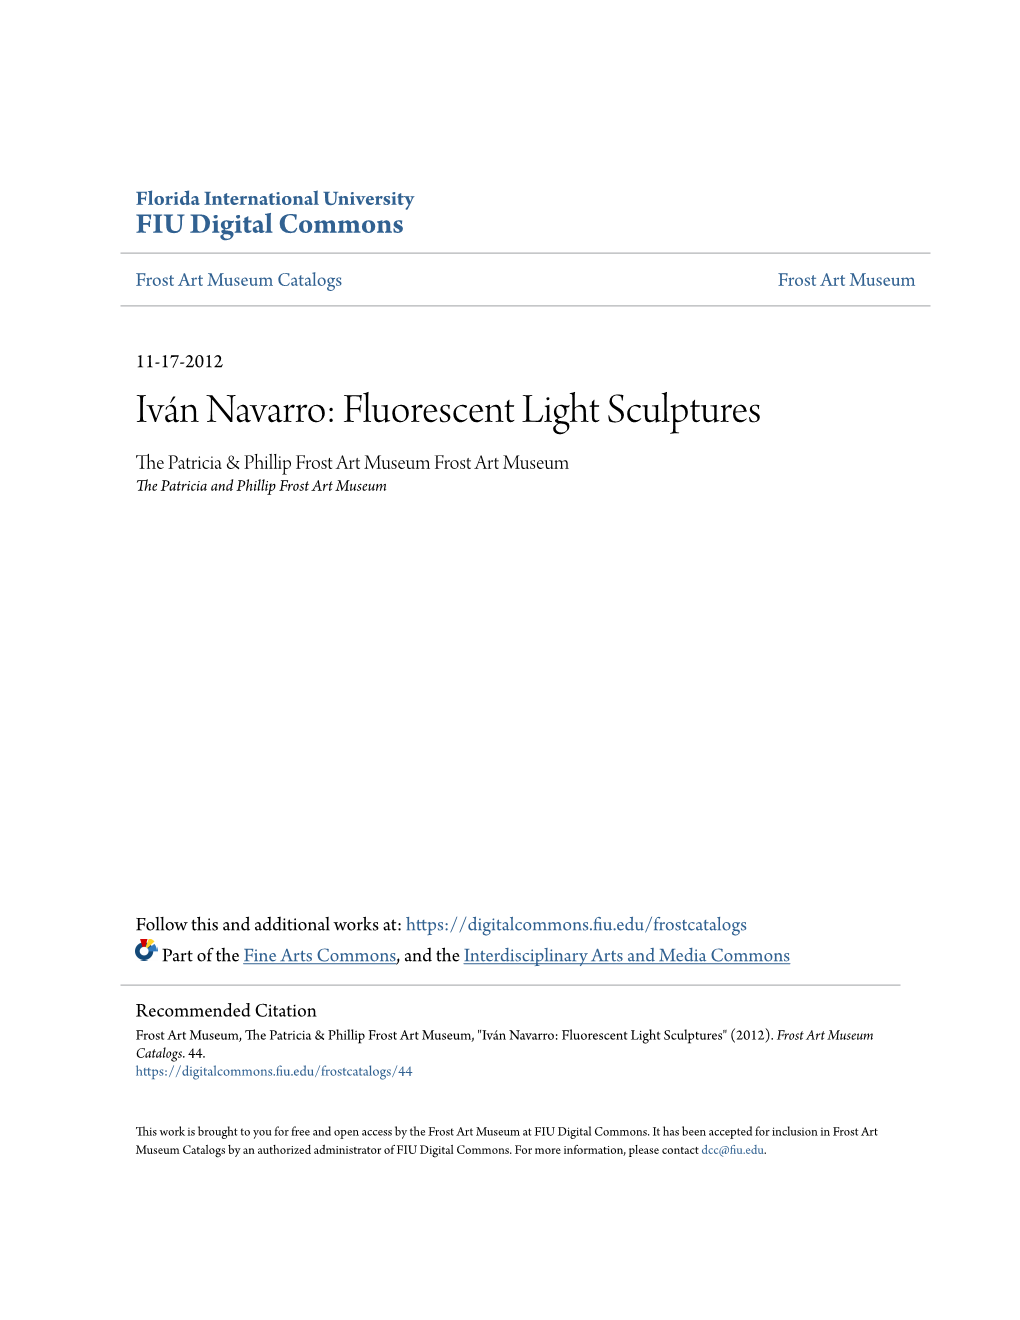 Ivã¡N Navarro: Fluorescent Light Sculptures